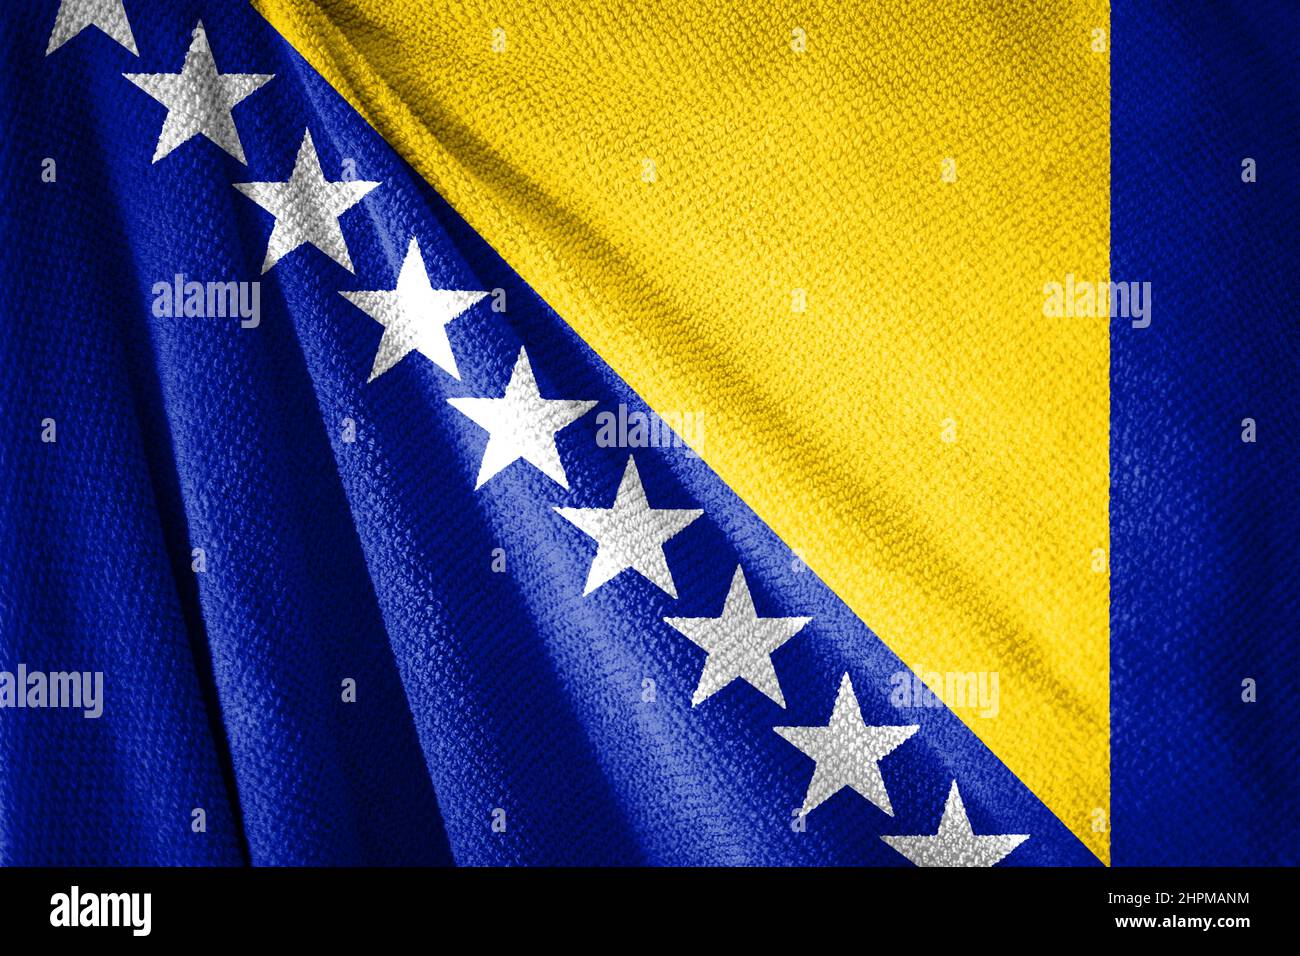 Bosnia and Herzegovina flag on towel surface illustration with, country symbol Stock Photo